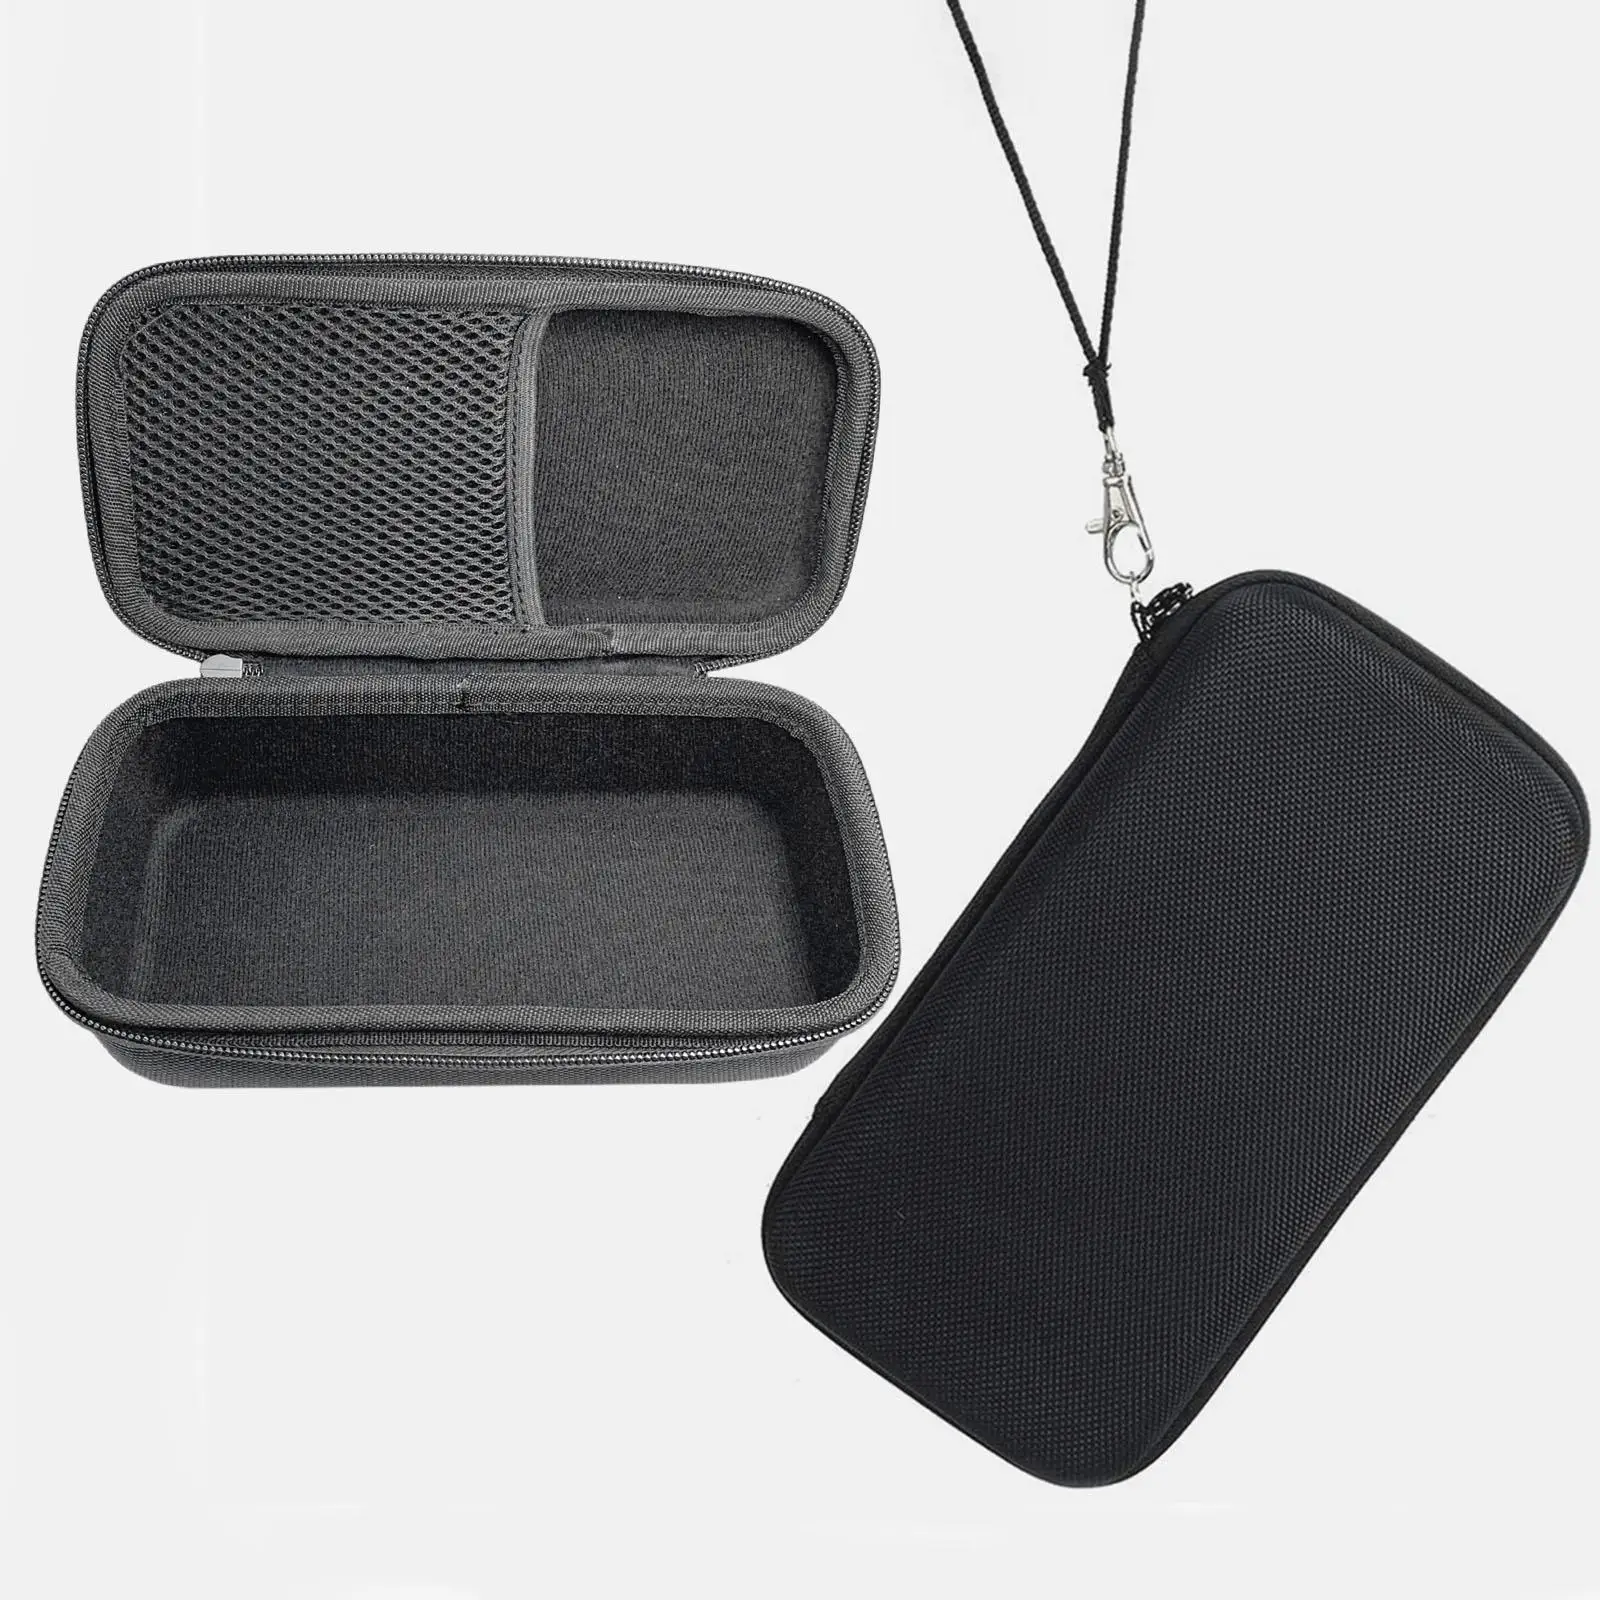 Hard Carrying Case Shockproof Box for Trms600 Digital Multimeter